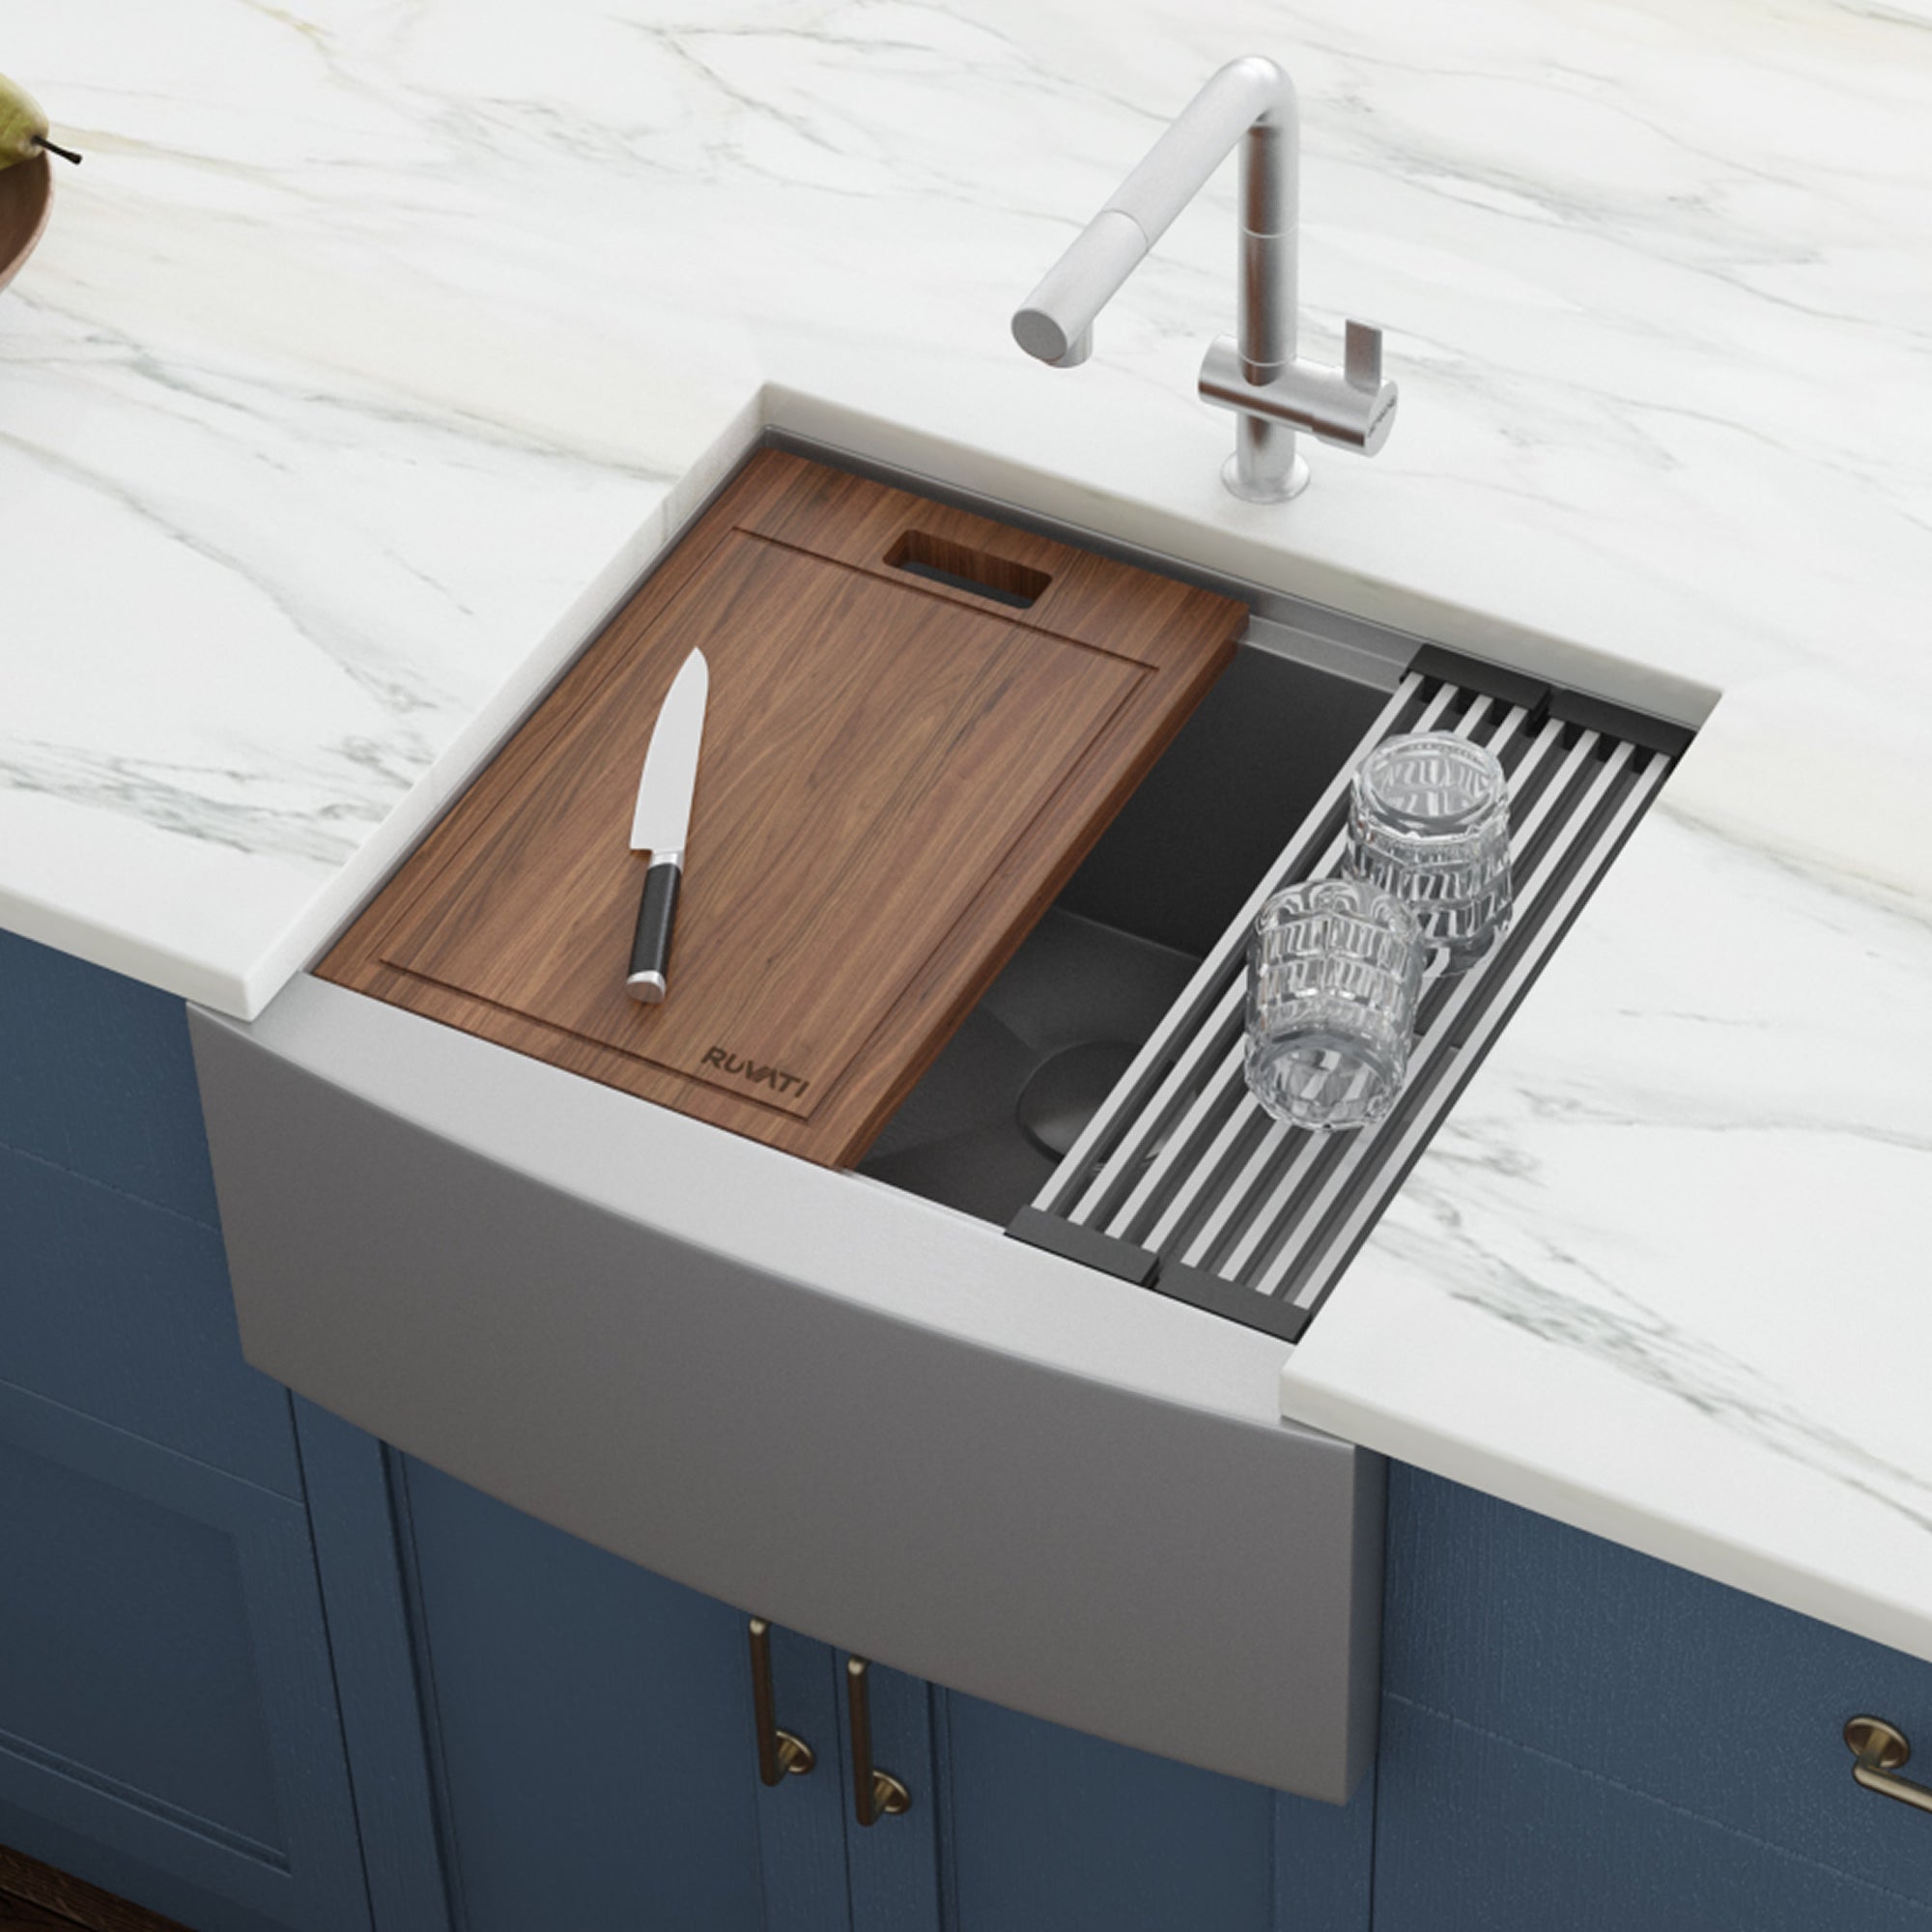 30 x 22 x inch Farmhouse Kitchen Sink, Workstation Ledge 18 Gauge Stainless Steel Sink Modern Apron-front Single Bowl Kitchen Sink - 3